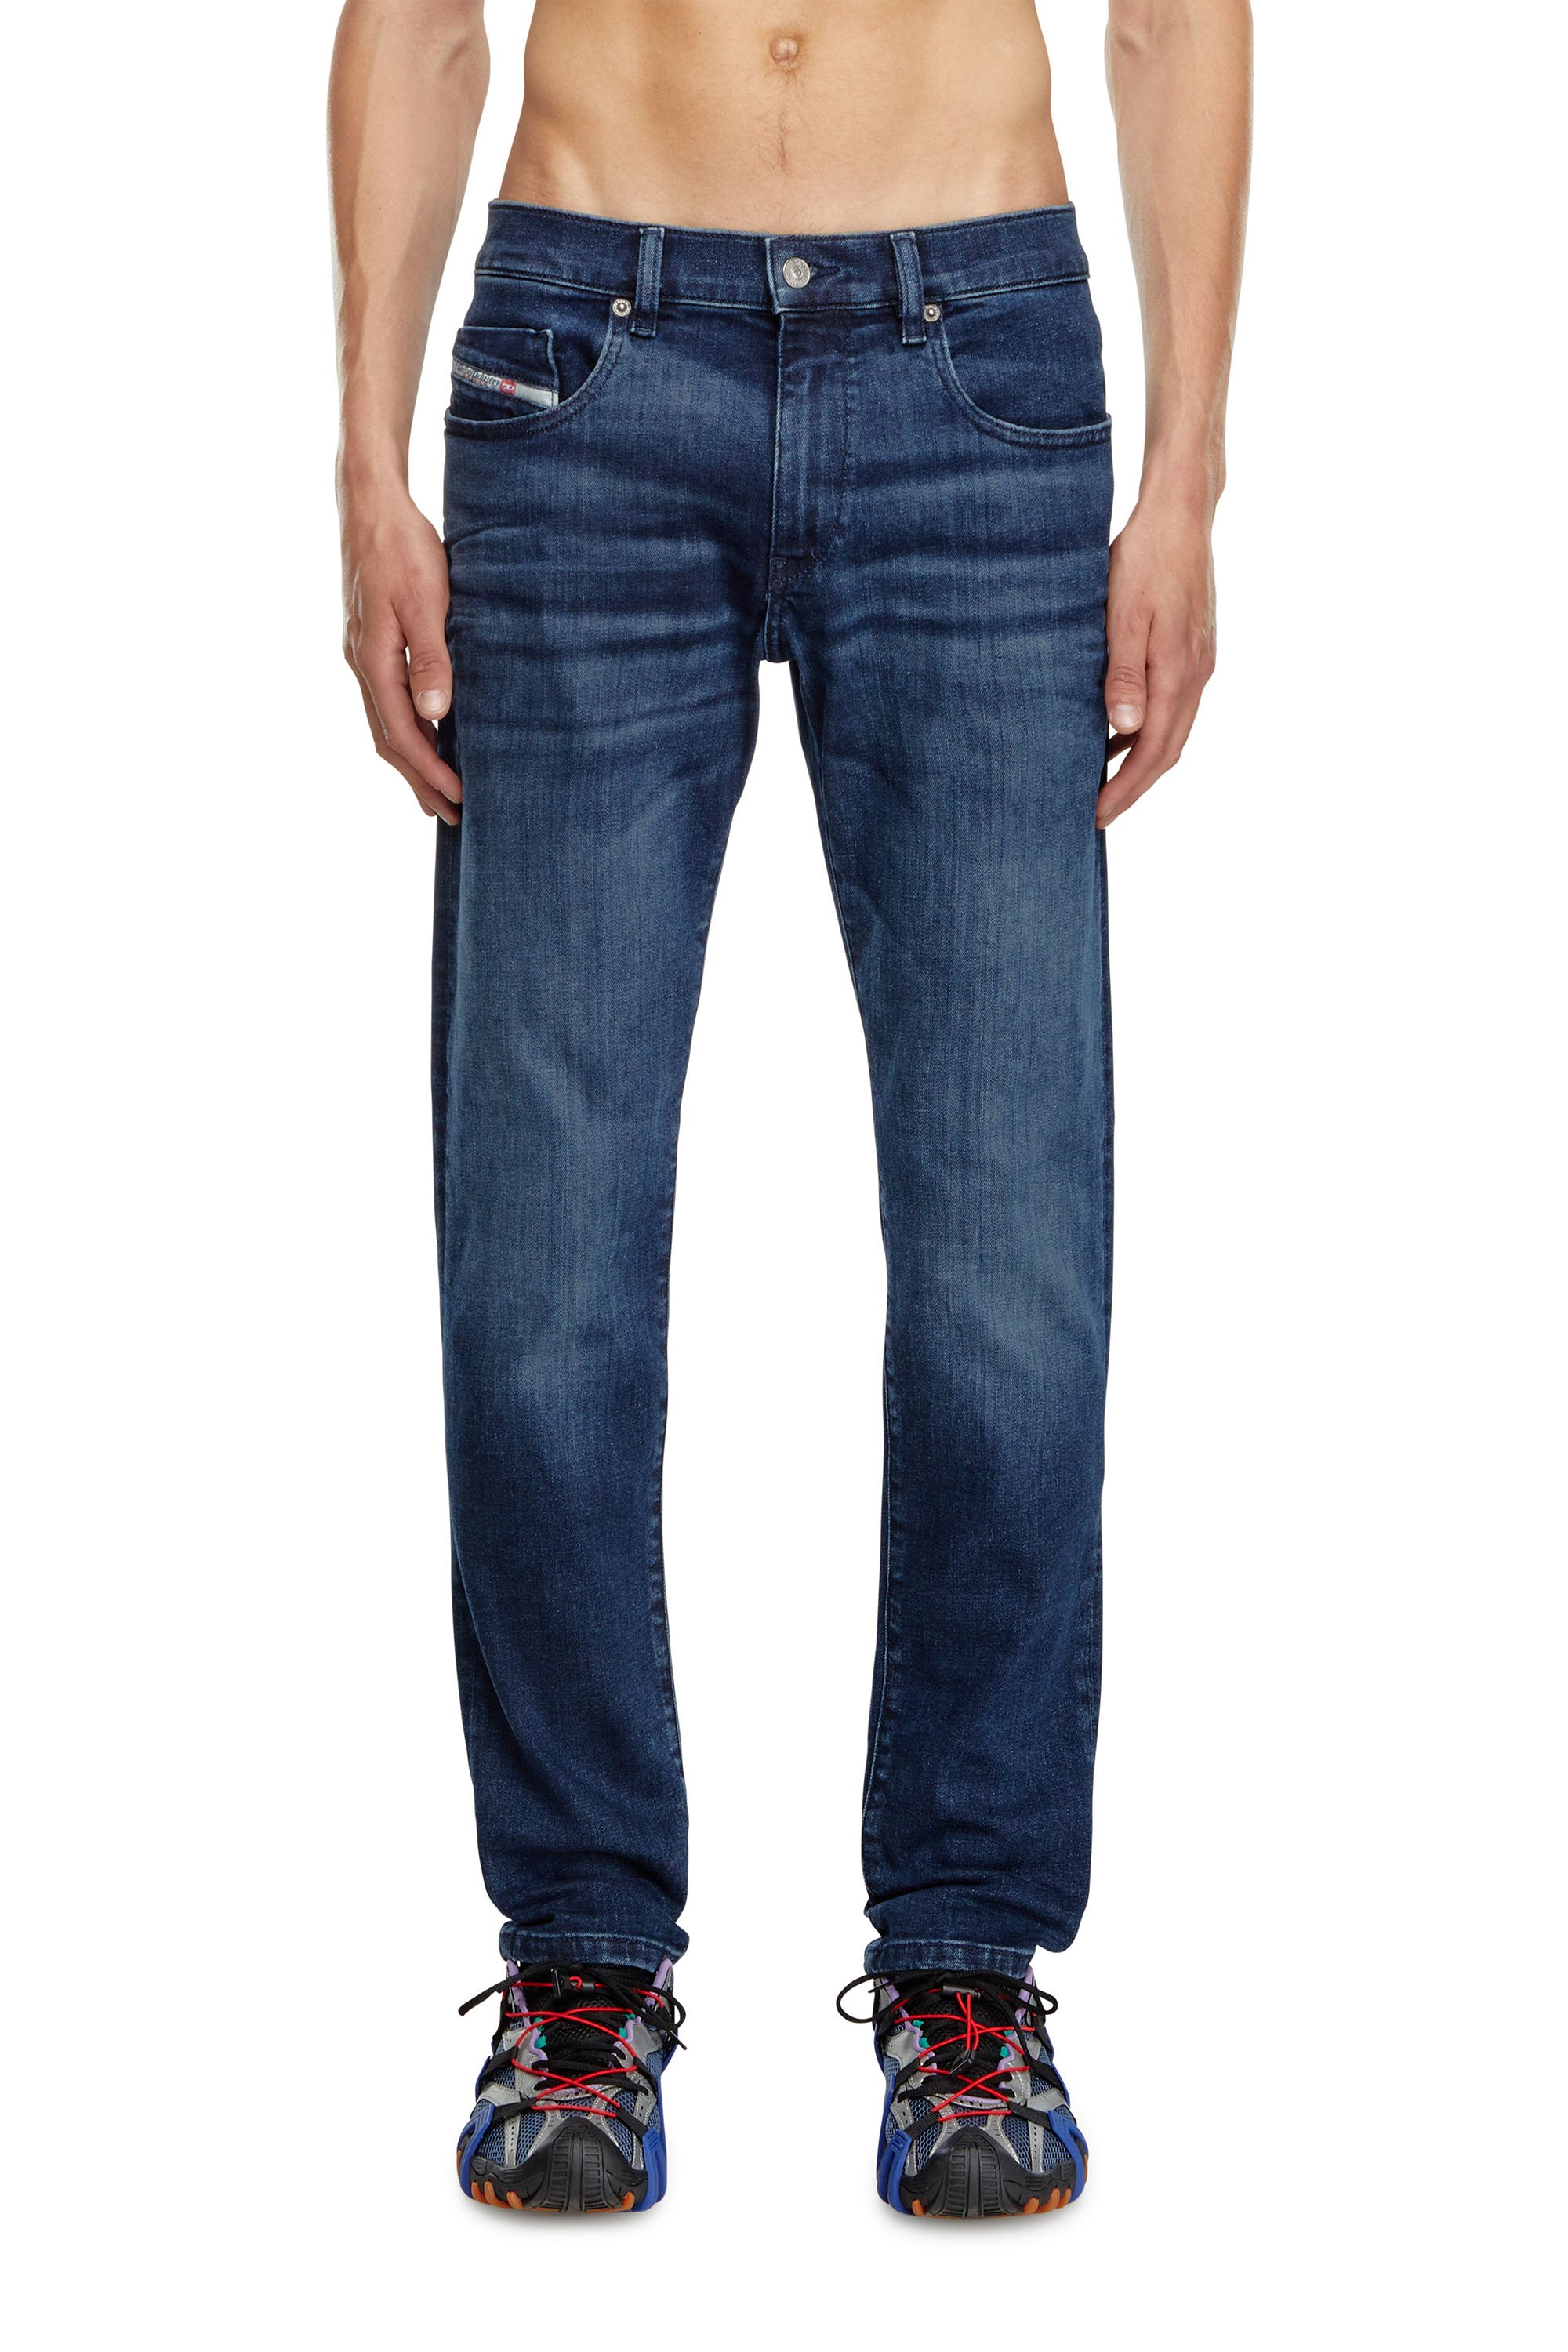 Diesel - Slim Jeans 2019 D-Strukt 0GRDJ, Hombre Slim Jeans - 2019 D-Strukt in Azul marino - Image 1